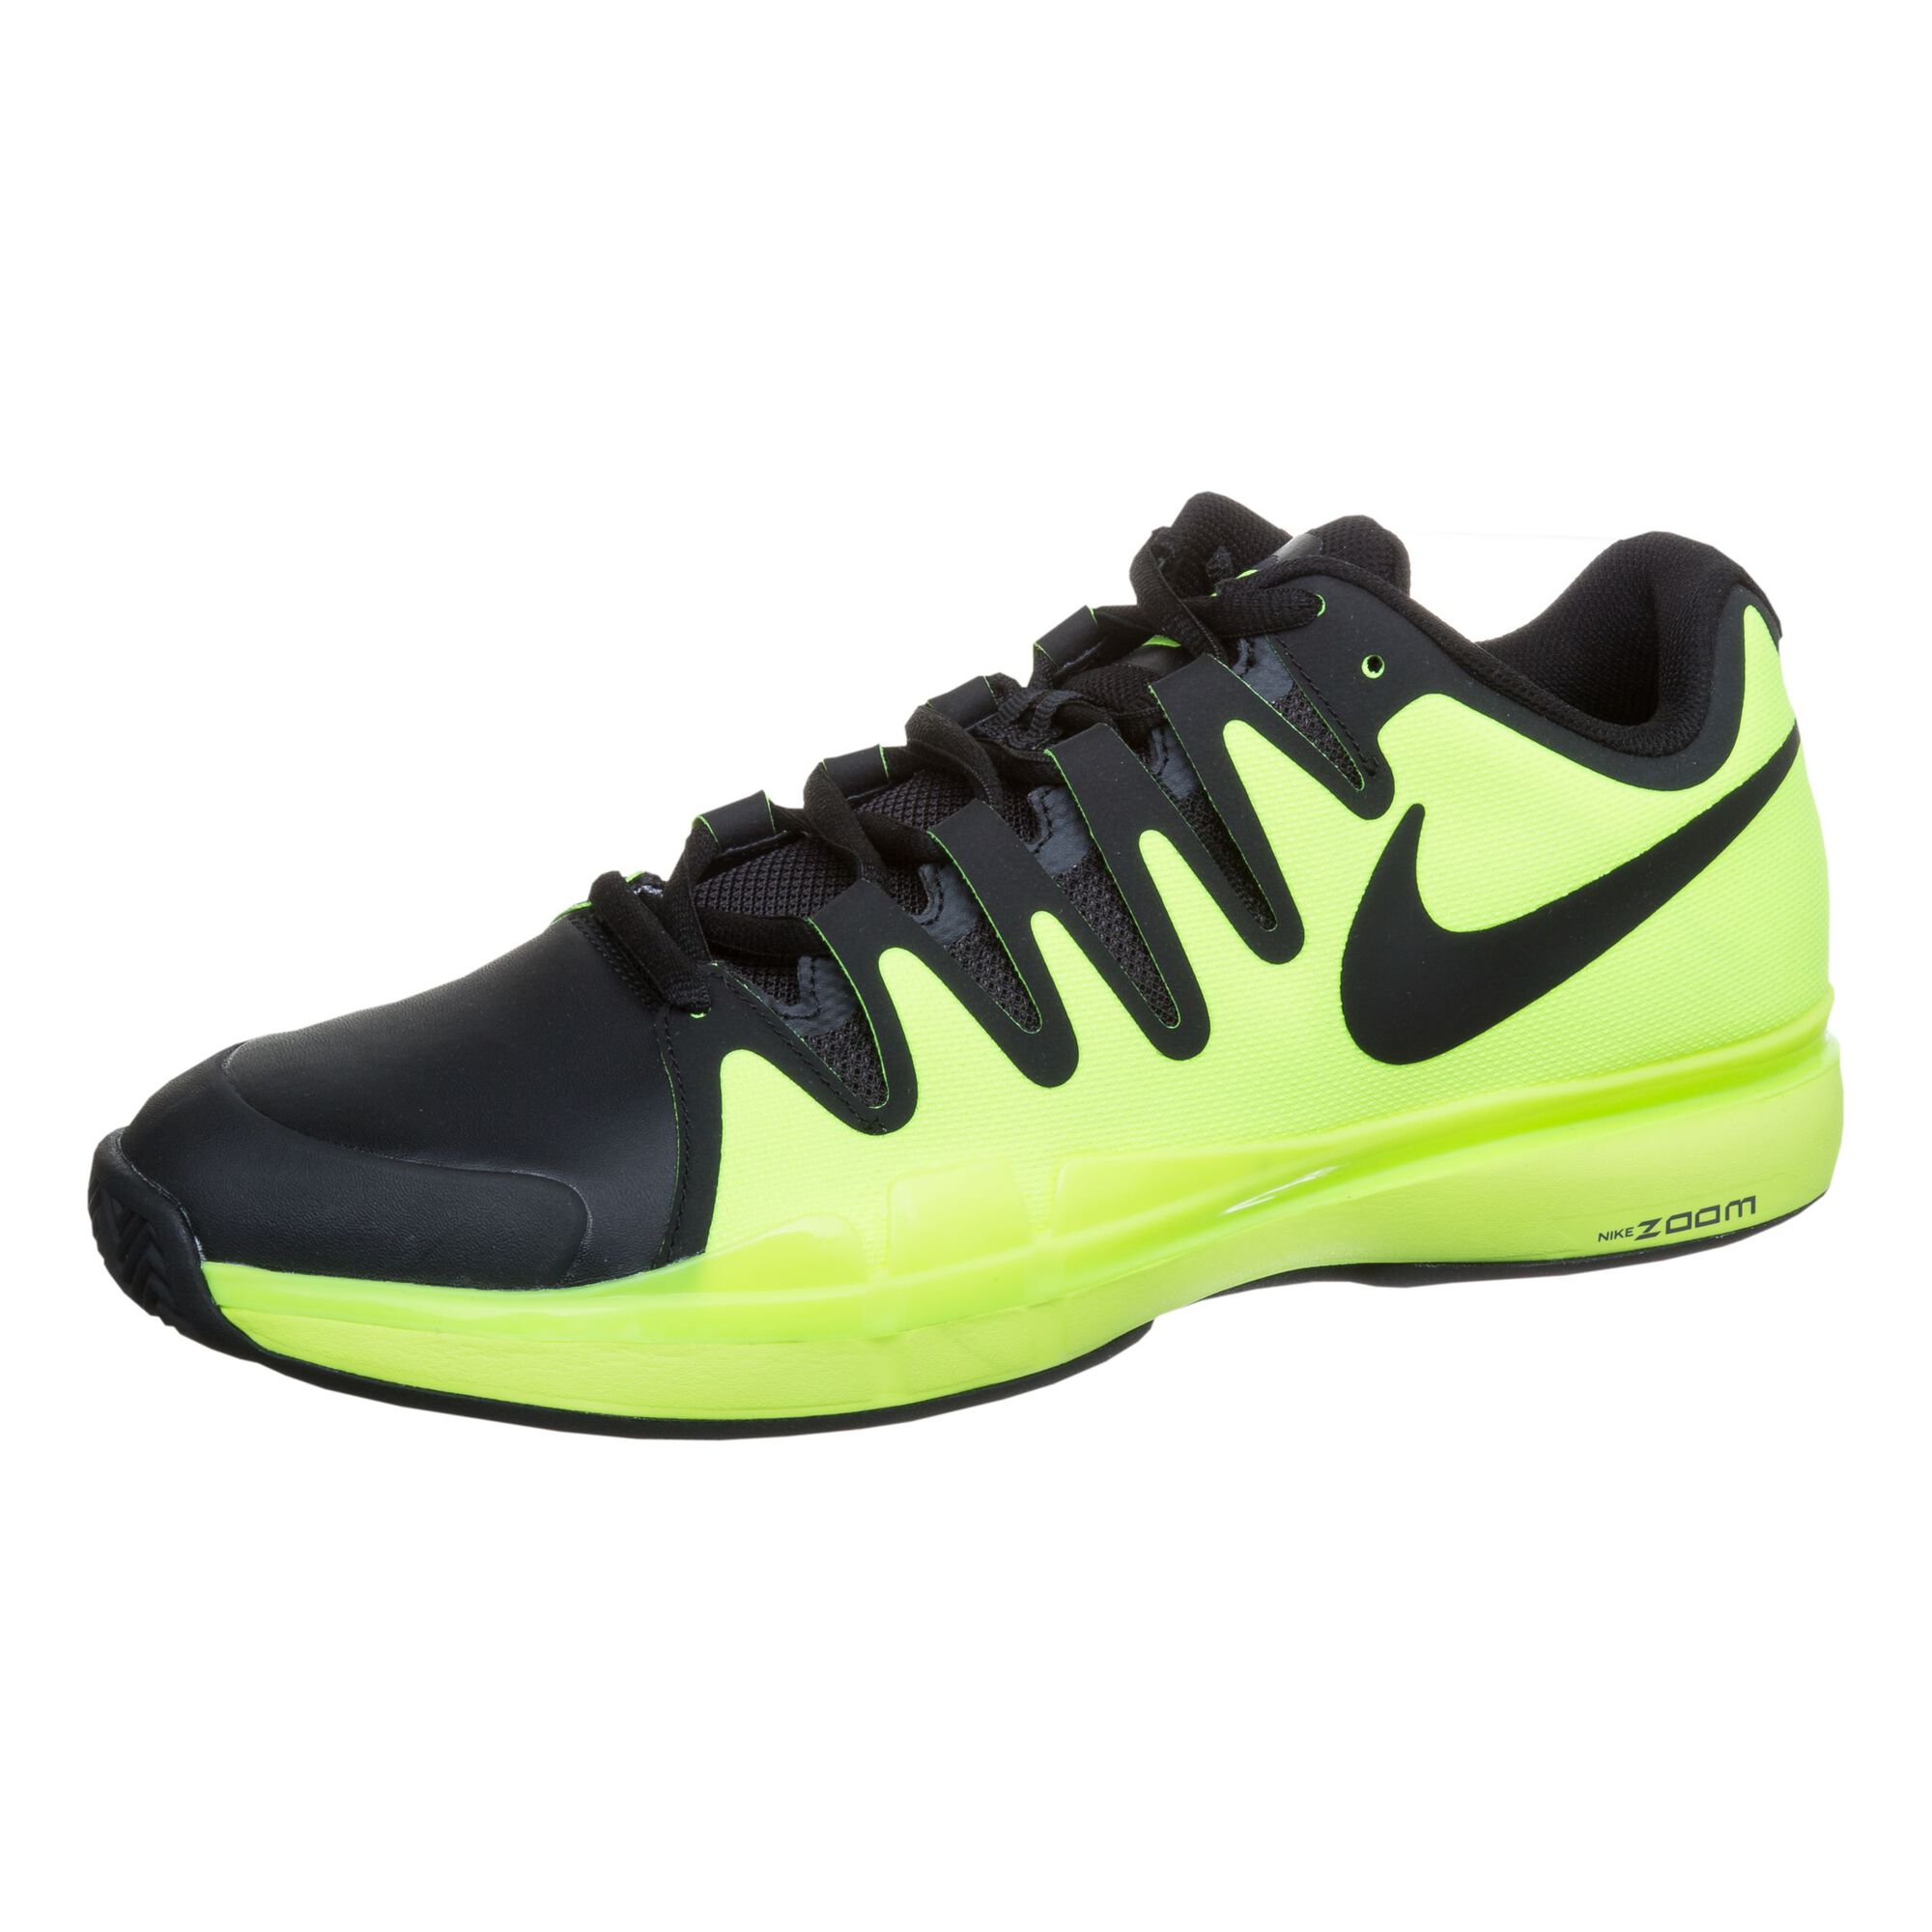 buy Nike Roger Federer Zoom Vapor 9.5 Tour Clay Court Shoe Men - Neon Yellow, Black online 